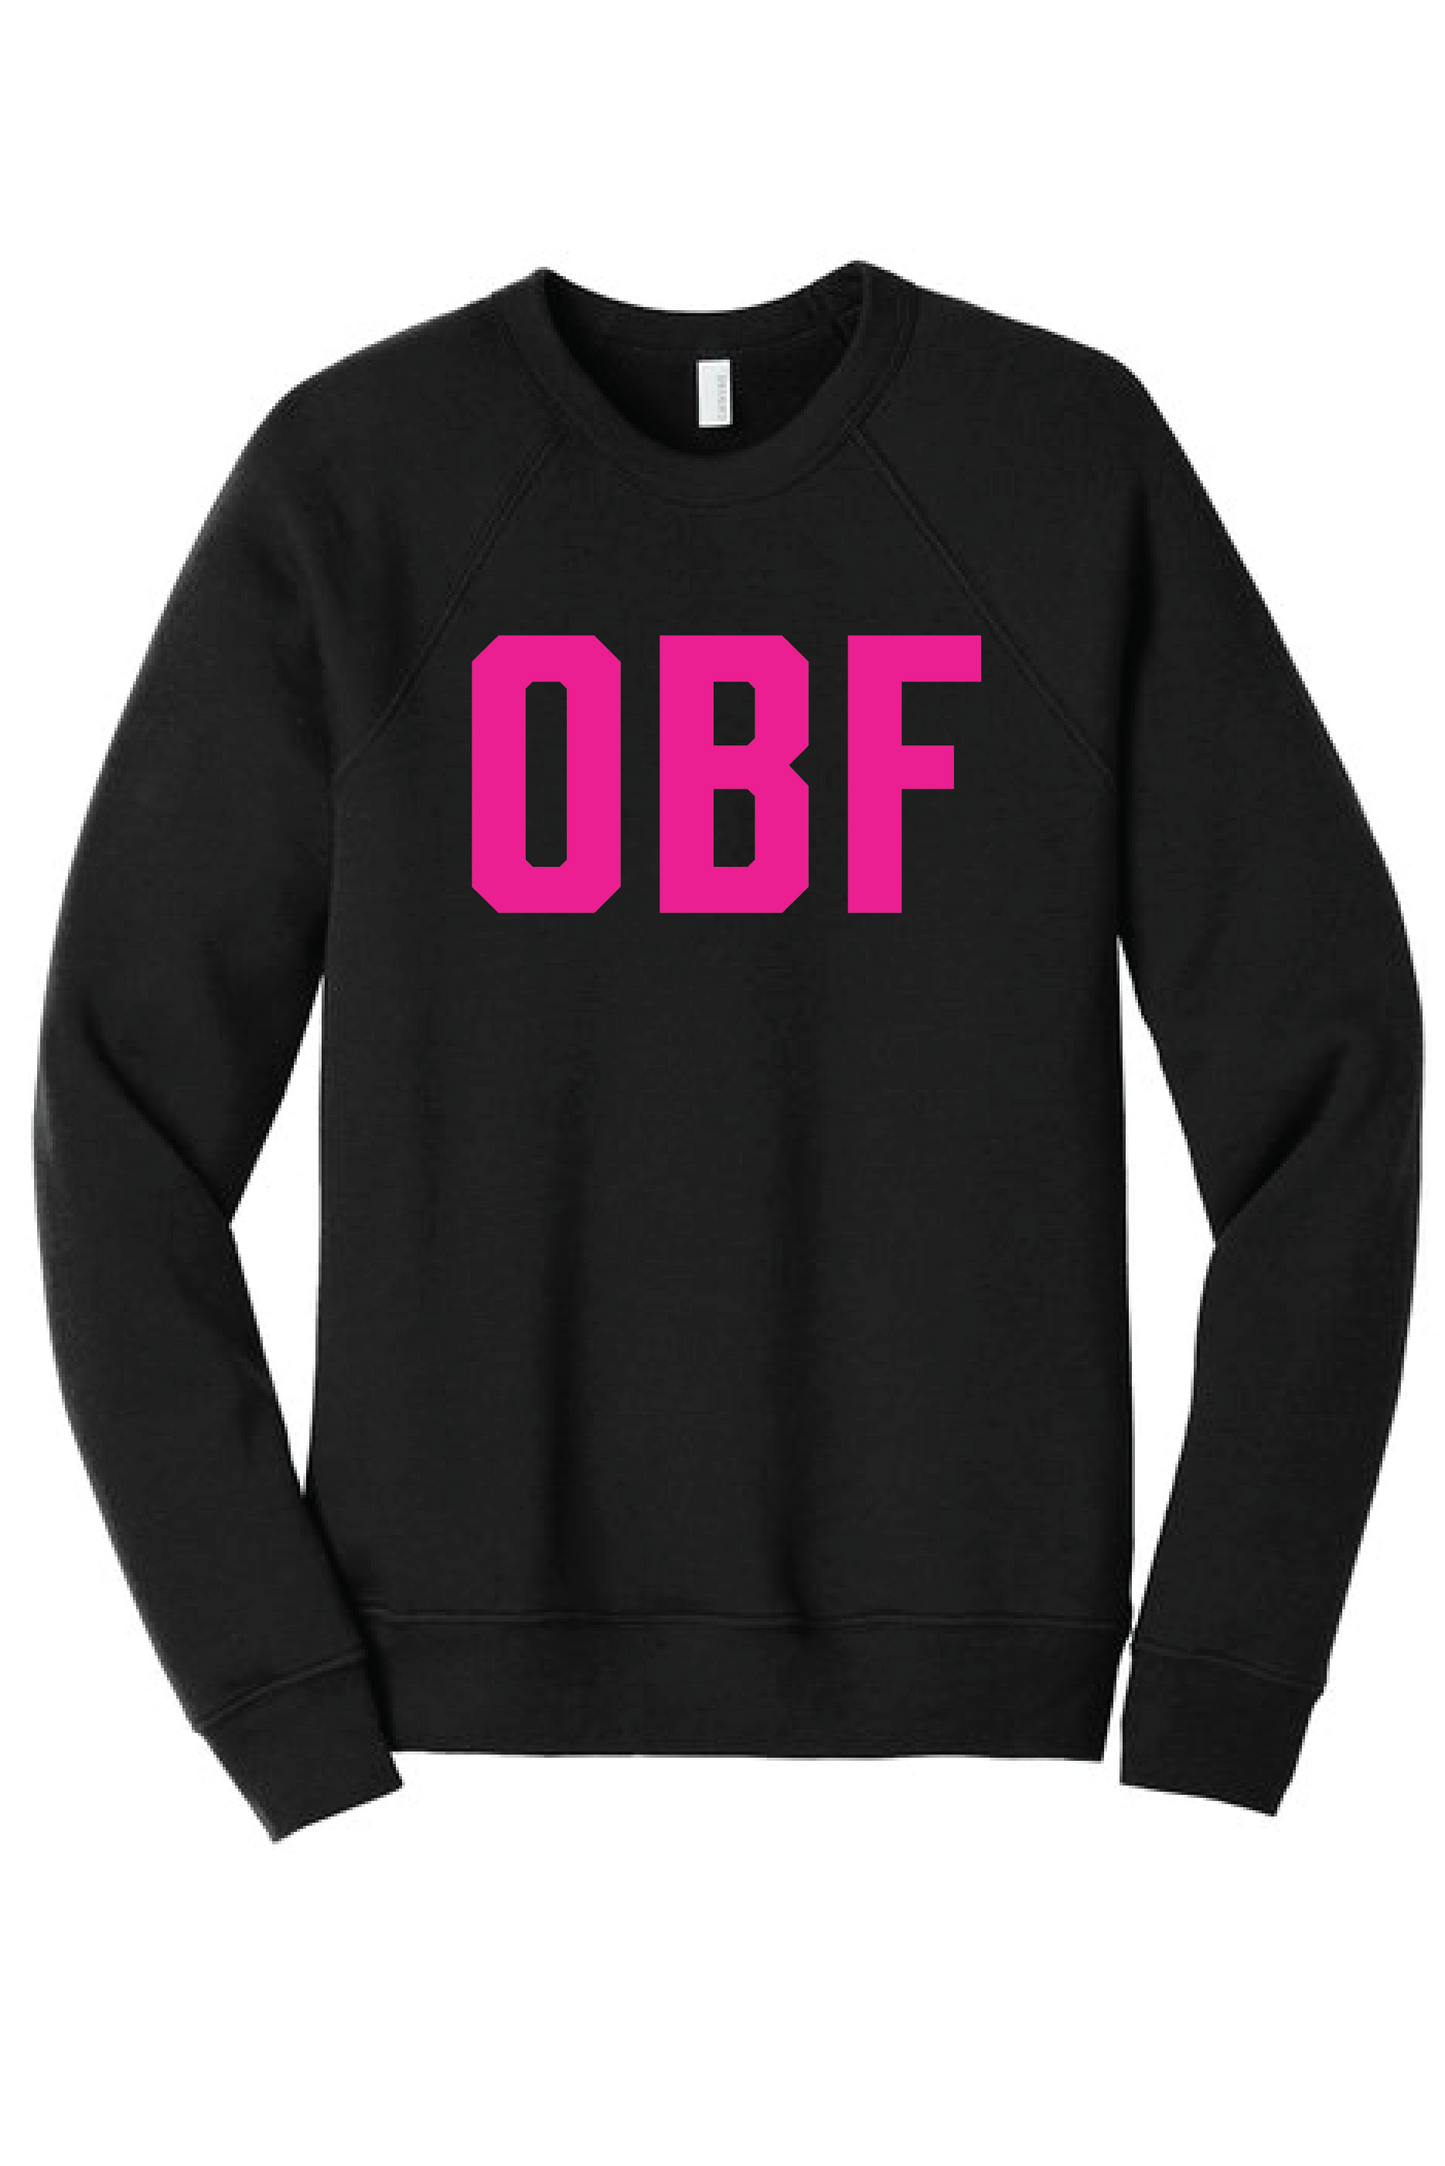 OBF- Black crewneck